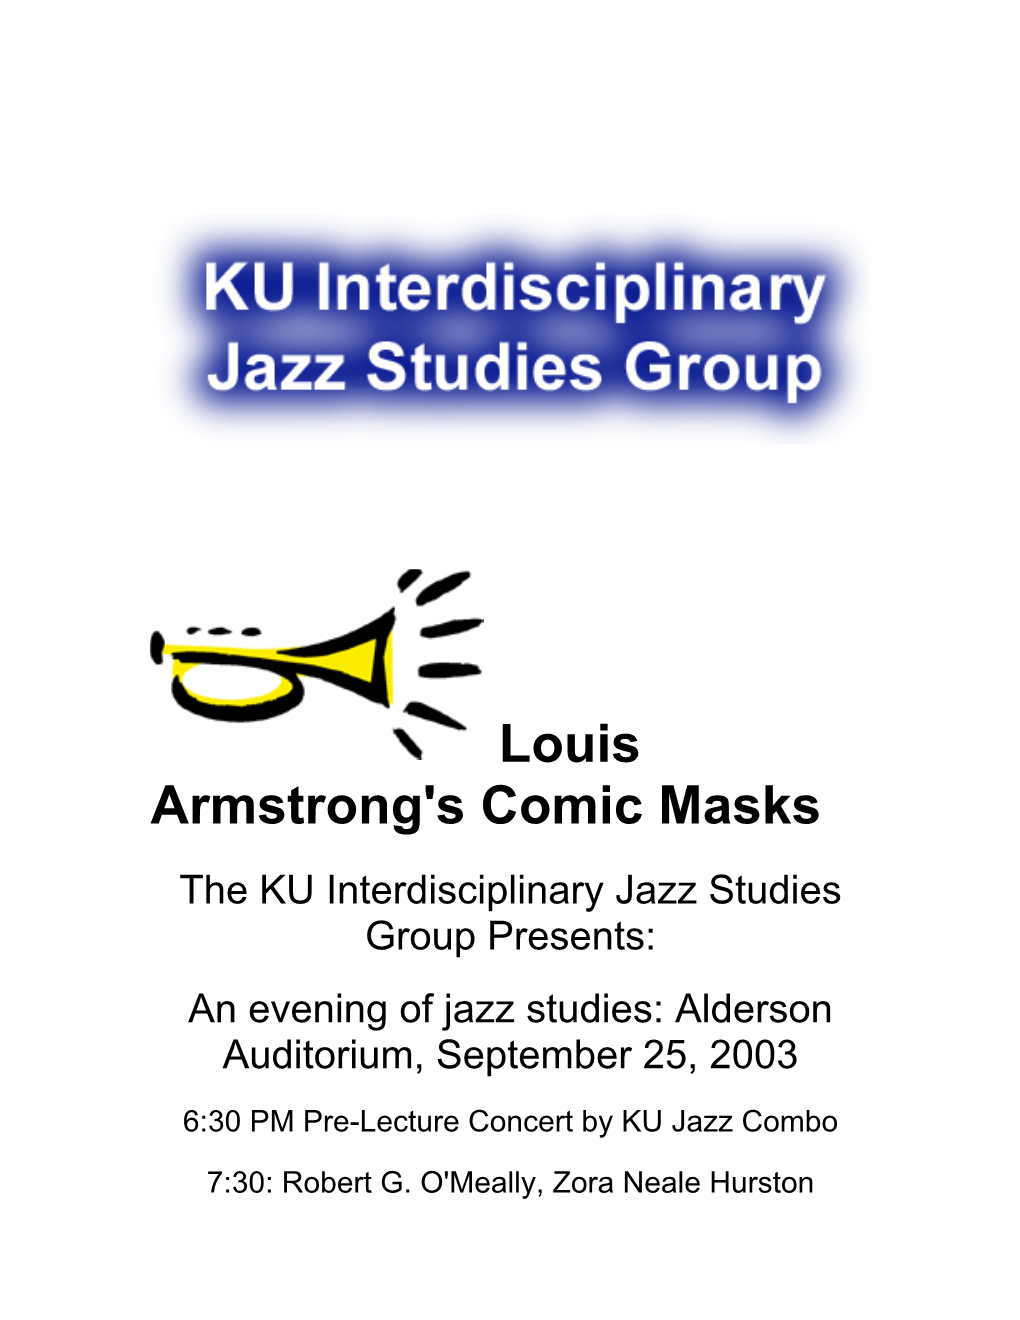 Louis Armstrong's Comic Masks the KU Interdisciplinary Jazz Studies Group Presents: an Evening of Jazz Studies: Alderson Auditorium, September 25, 2003